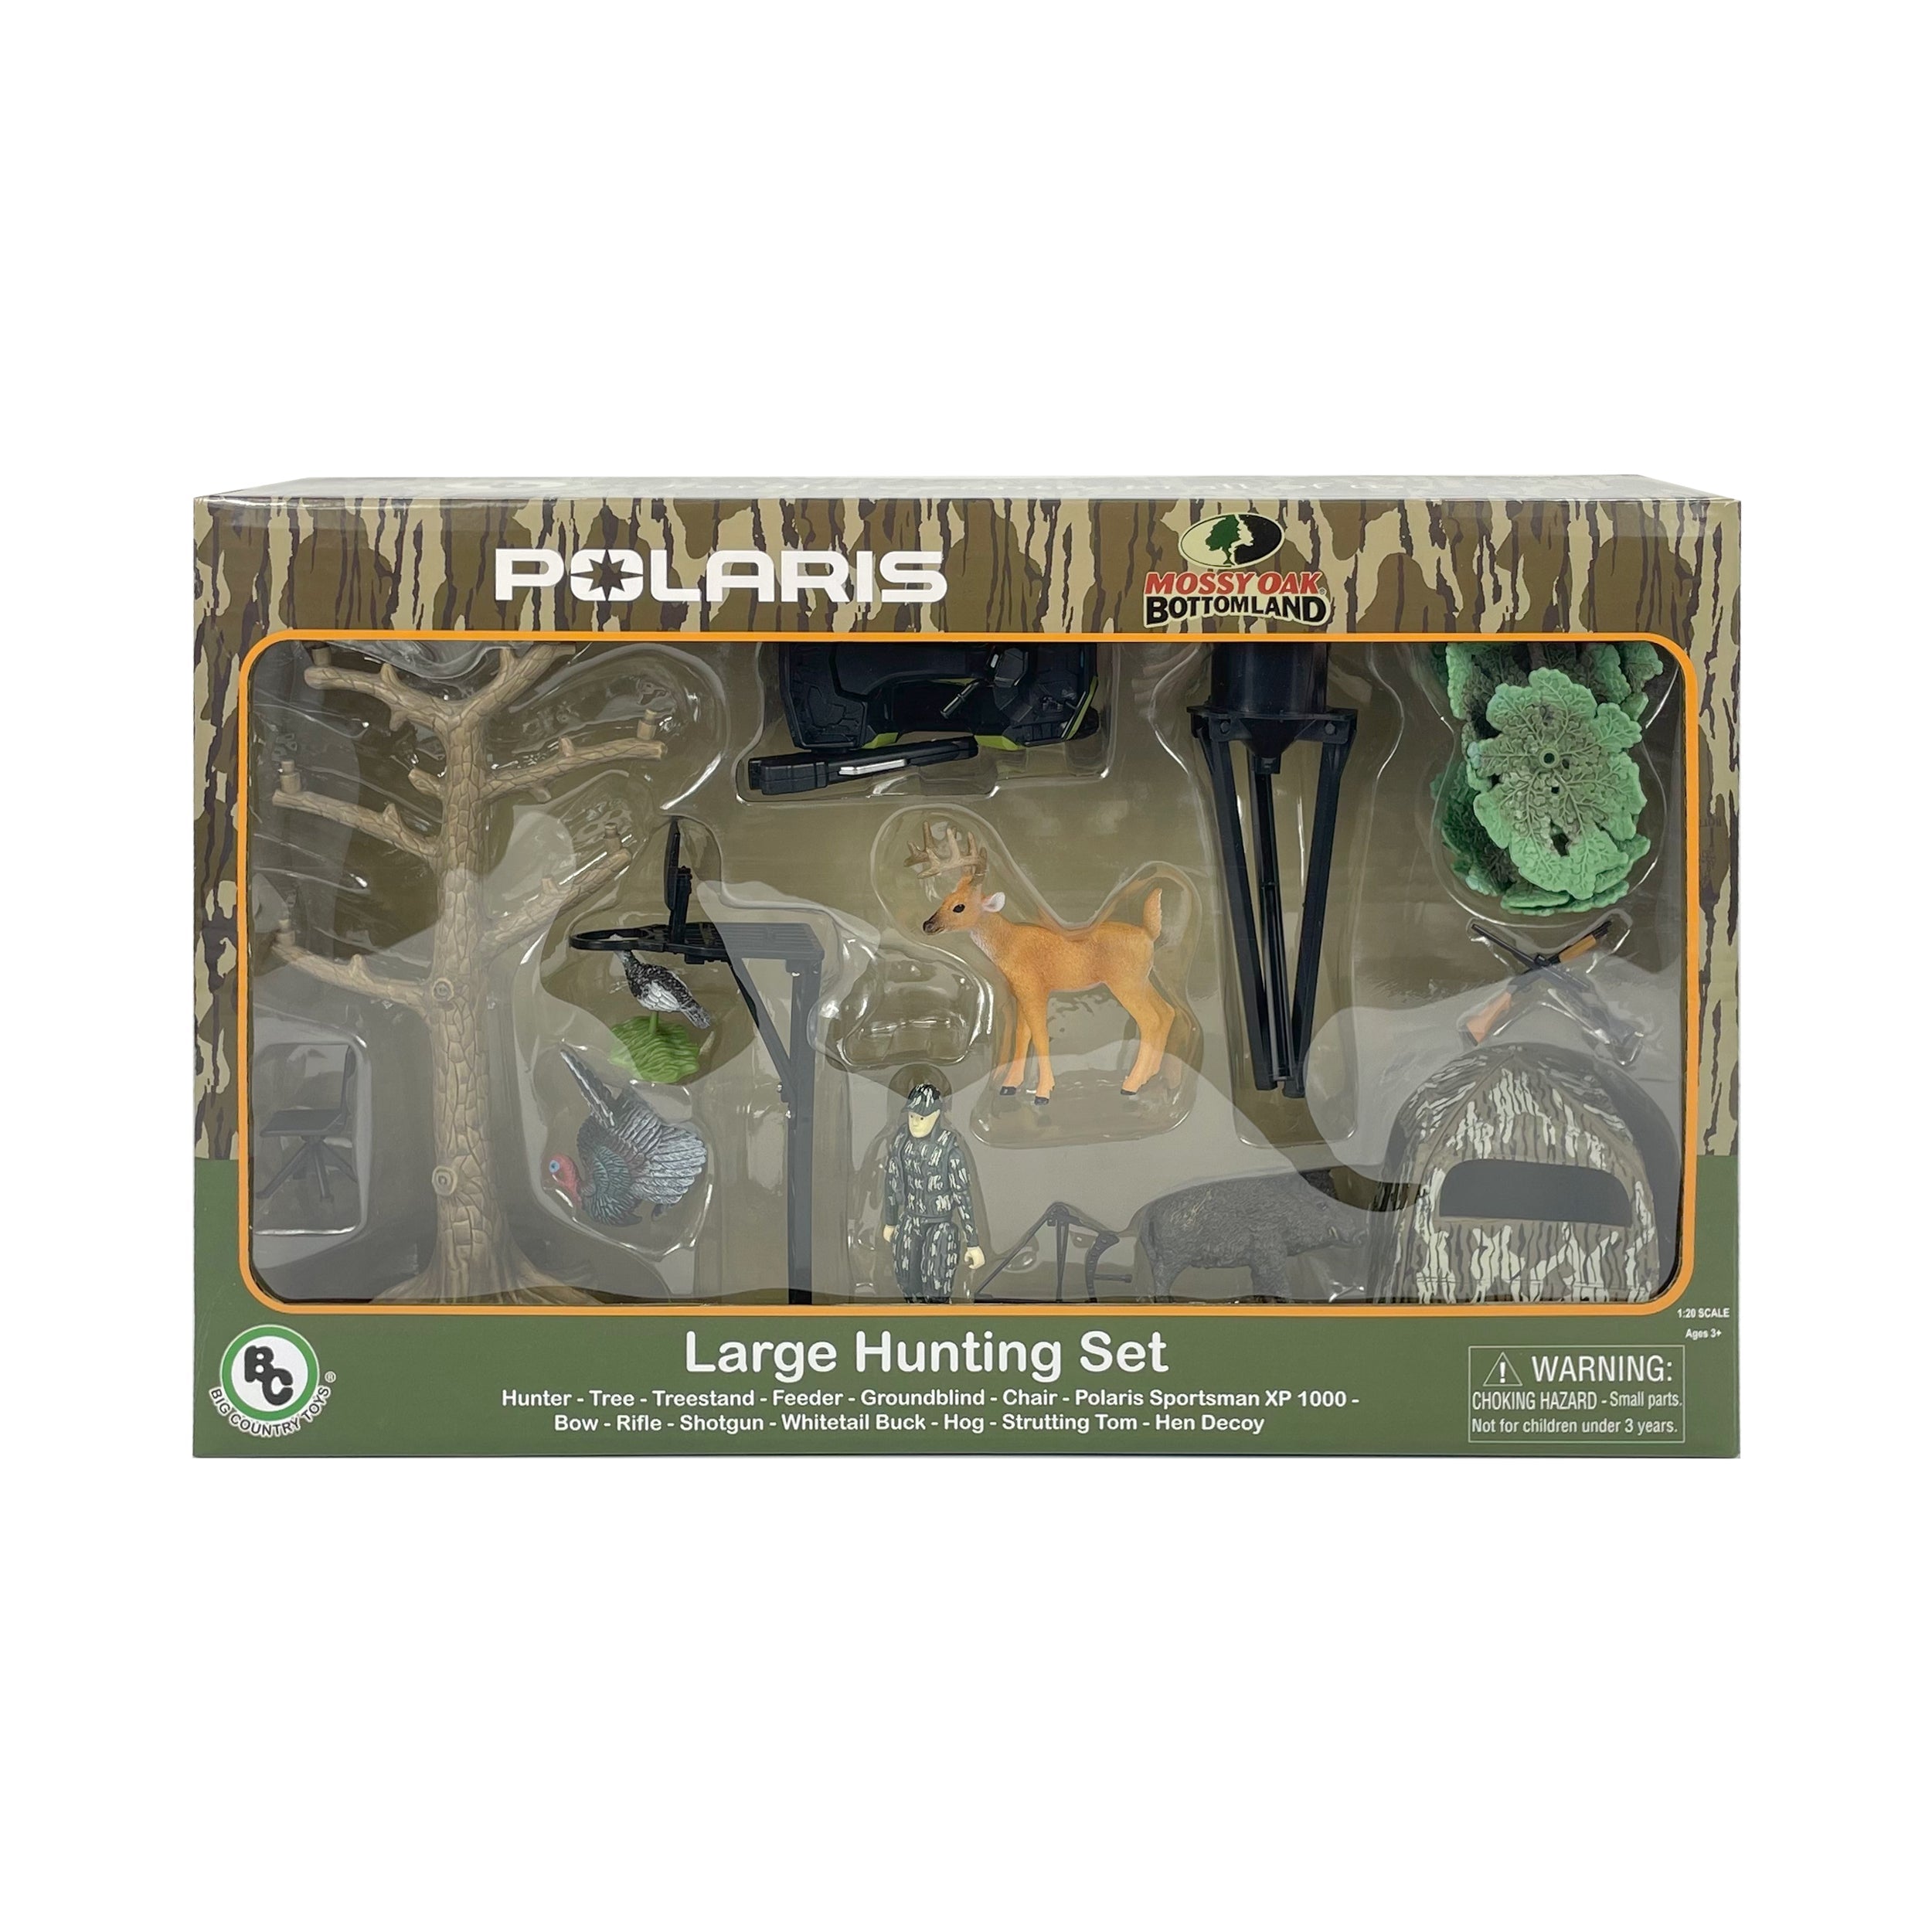 New-Ray Polaris Wildlife Hunter 9 PC Play Set Ducks Guns ATV 4 Wheeler Toys  for sale online